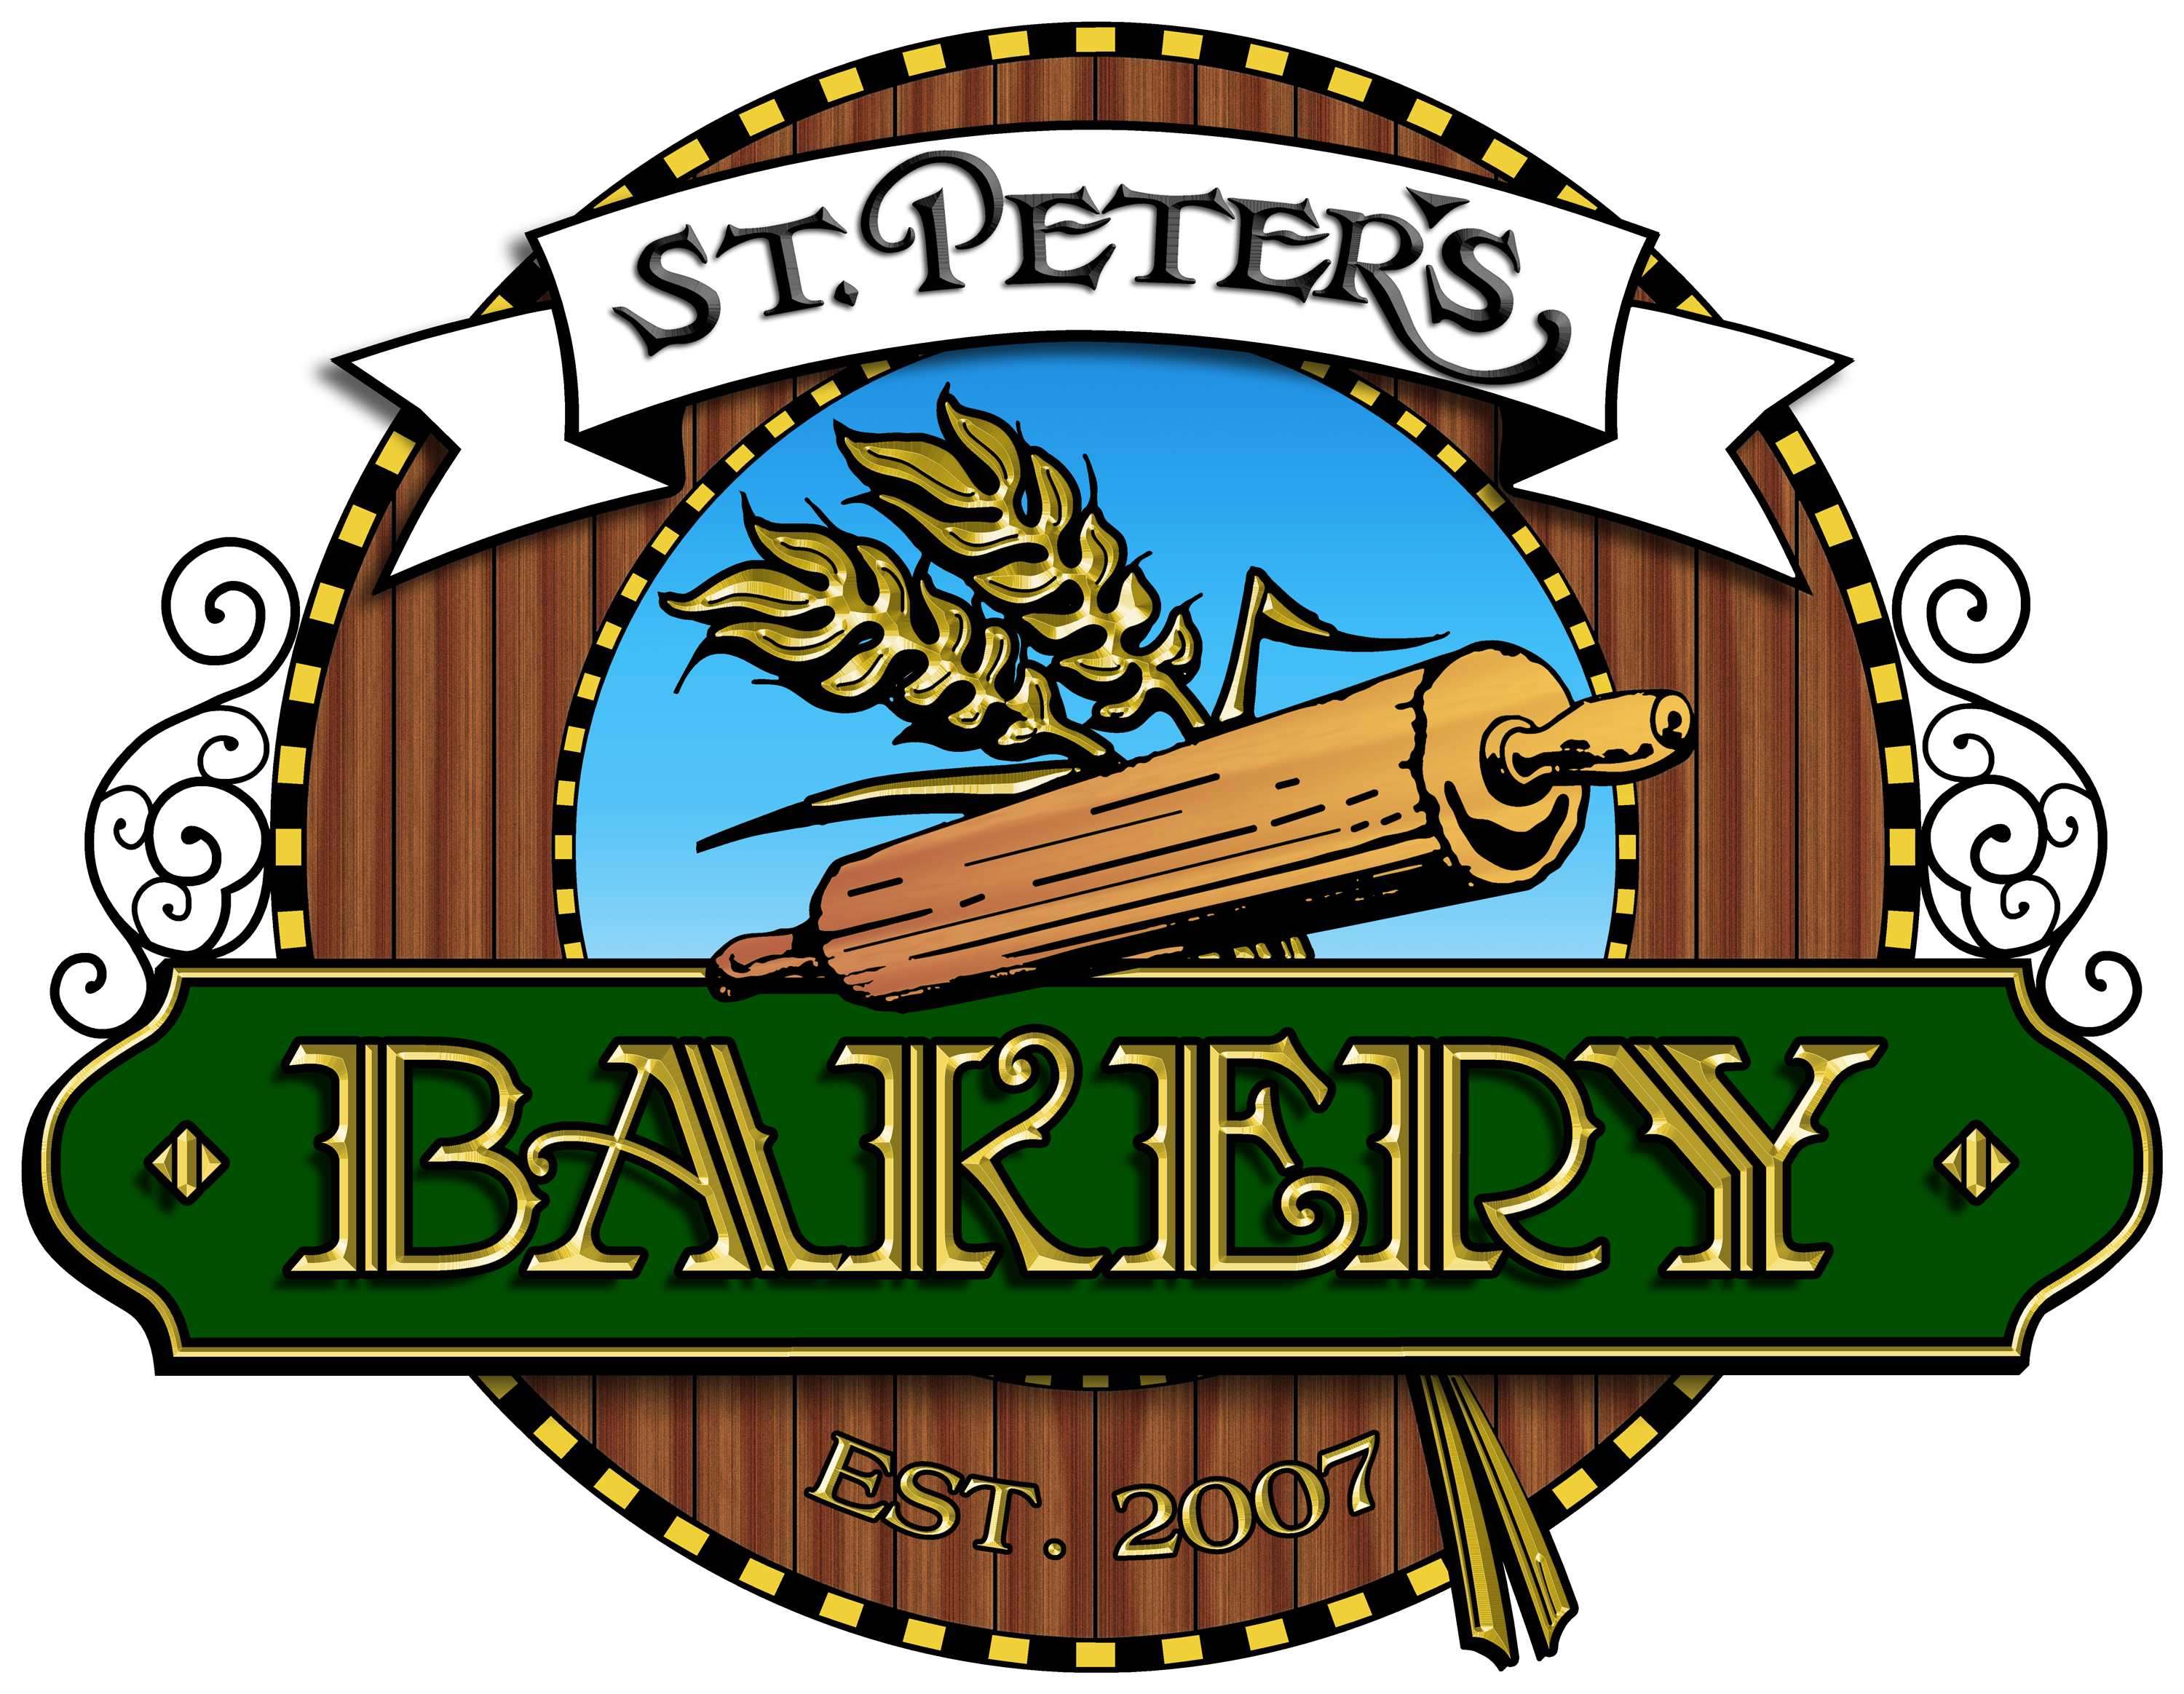 Phoenixville Farmers' Market » Blog Archive » St Peters Bakery logo